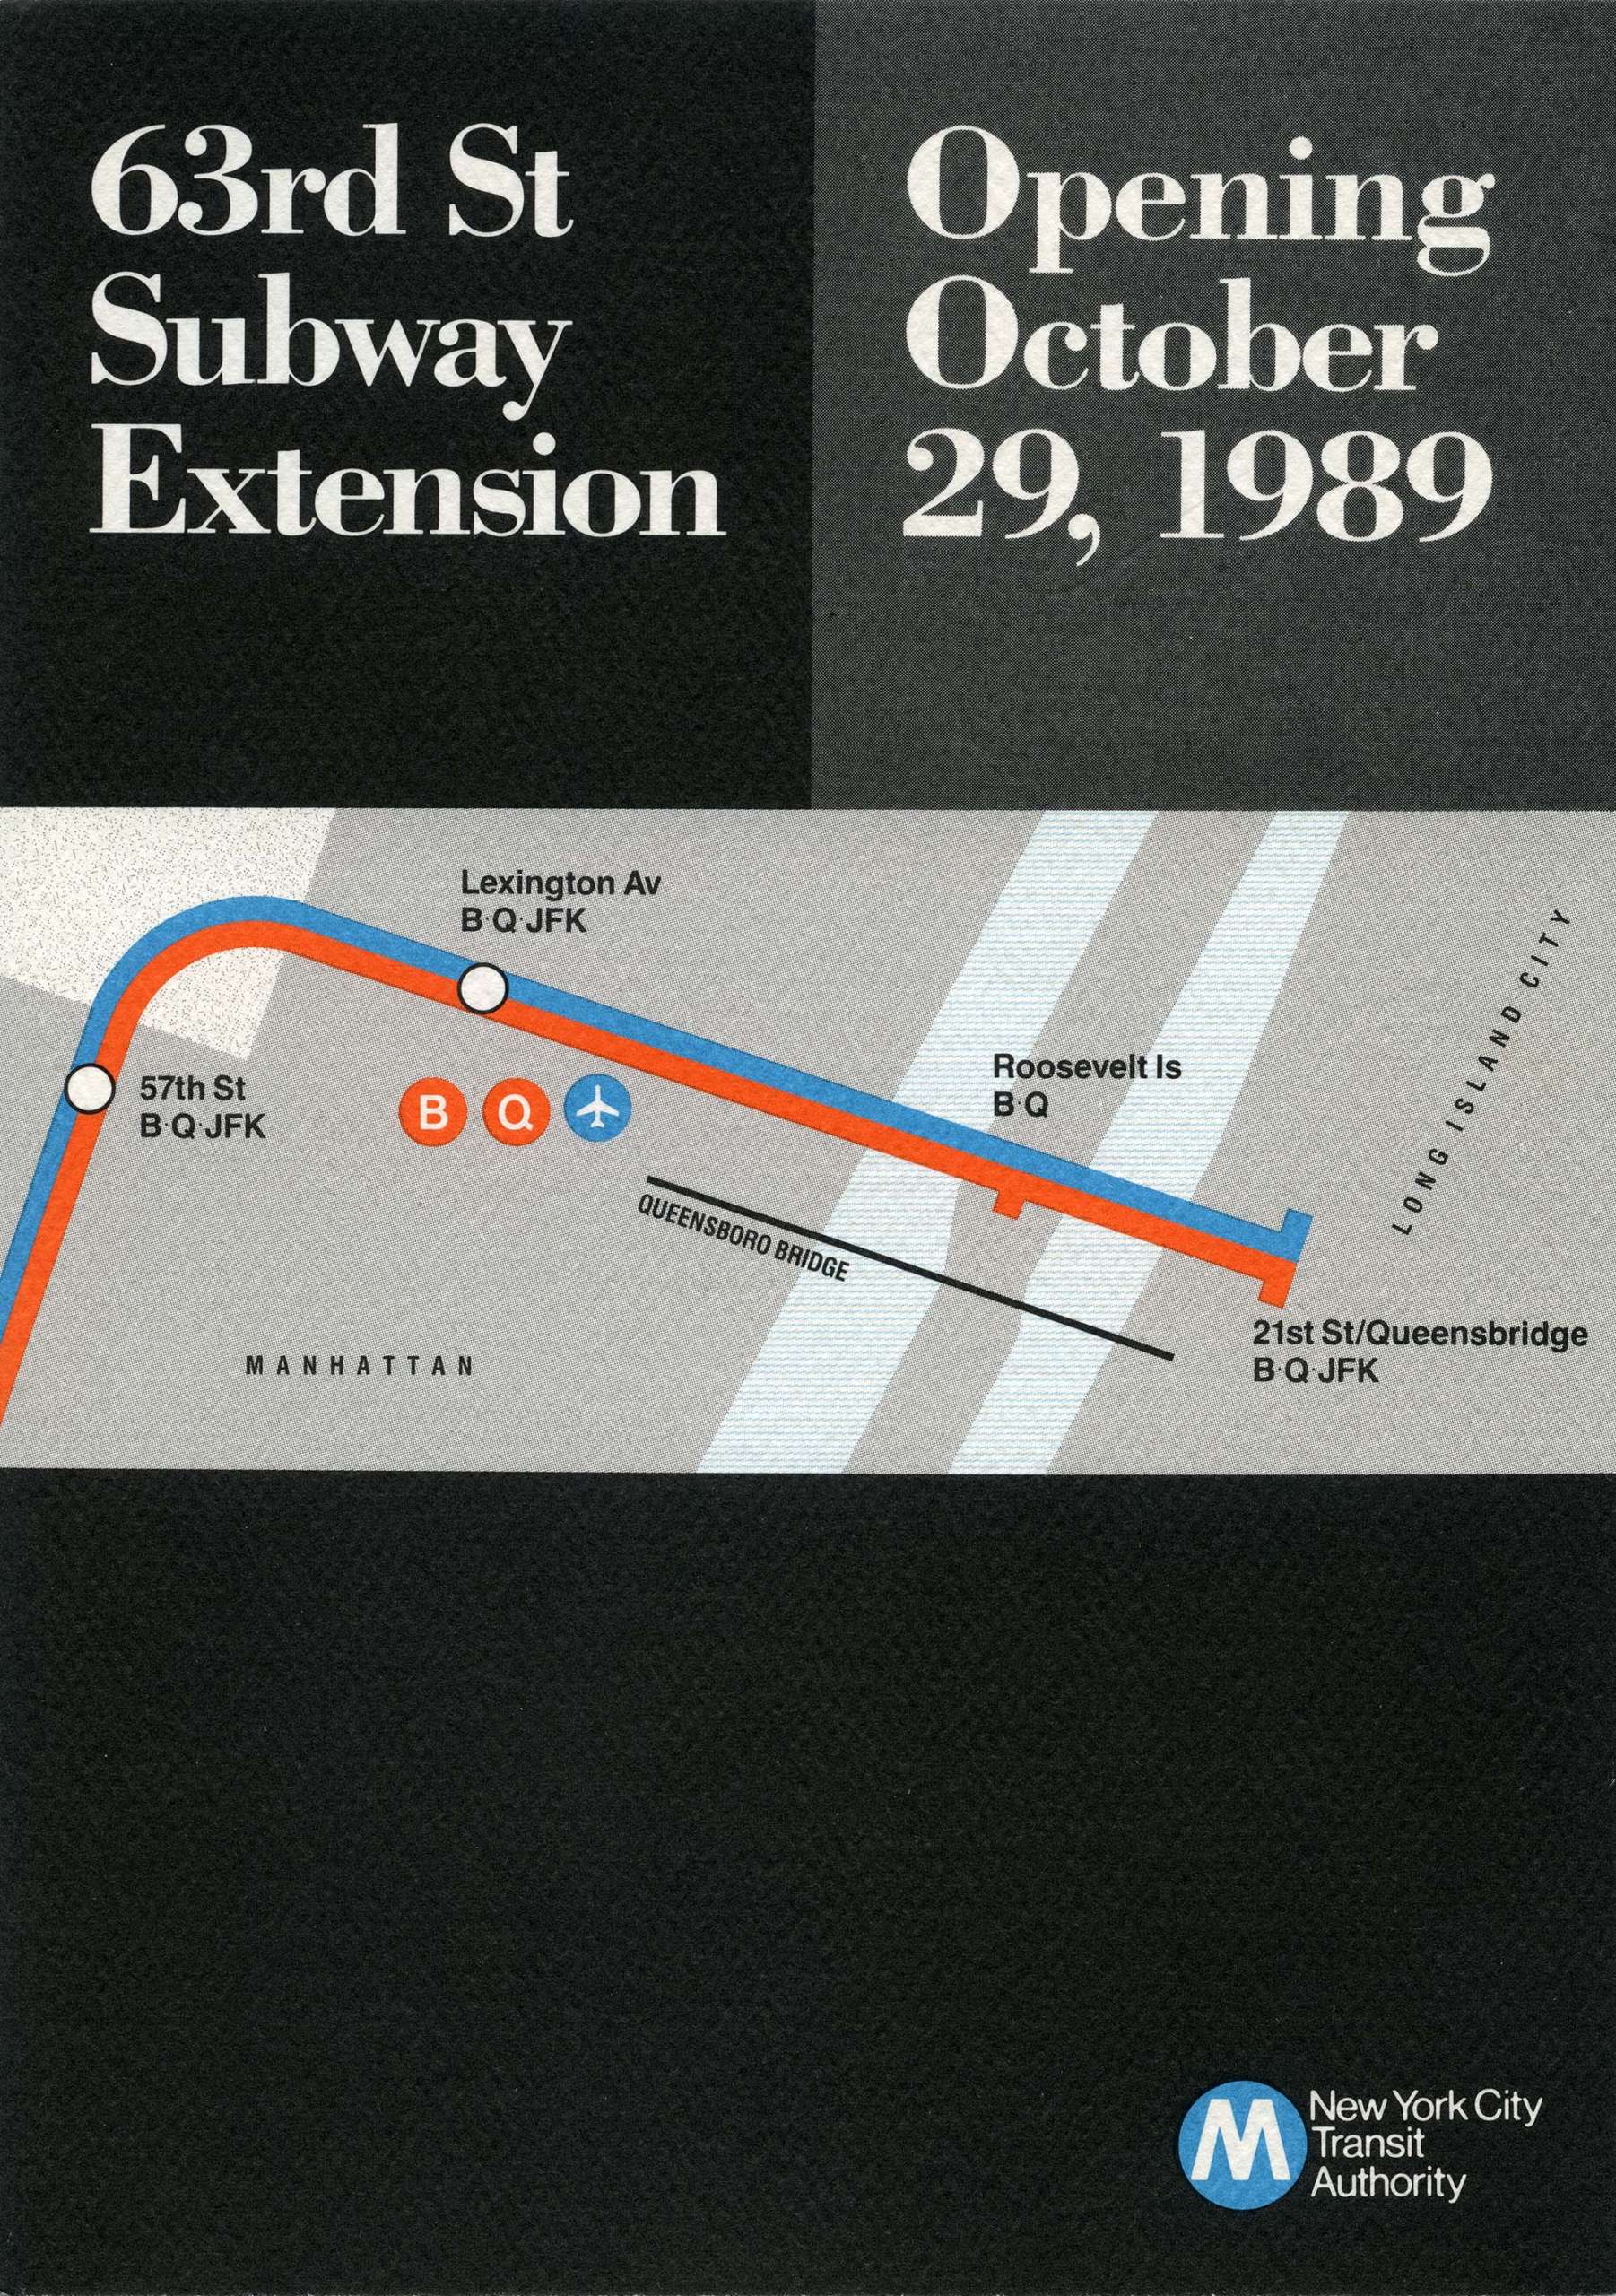 63rd Street Extension opening invitation, 1989